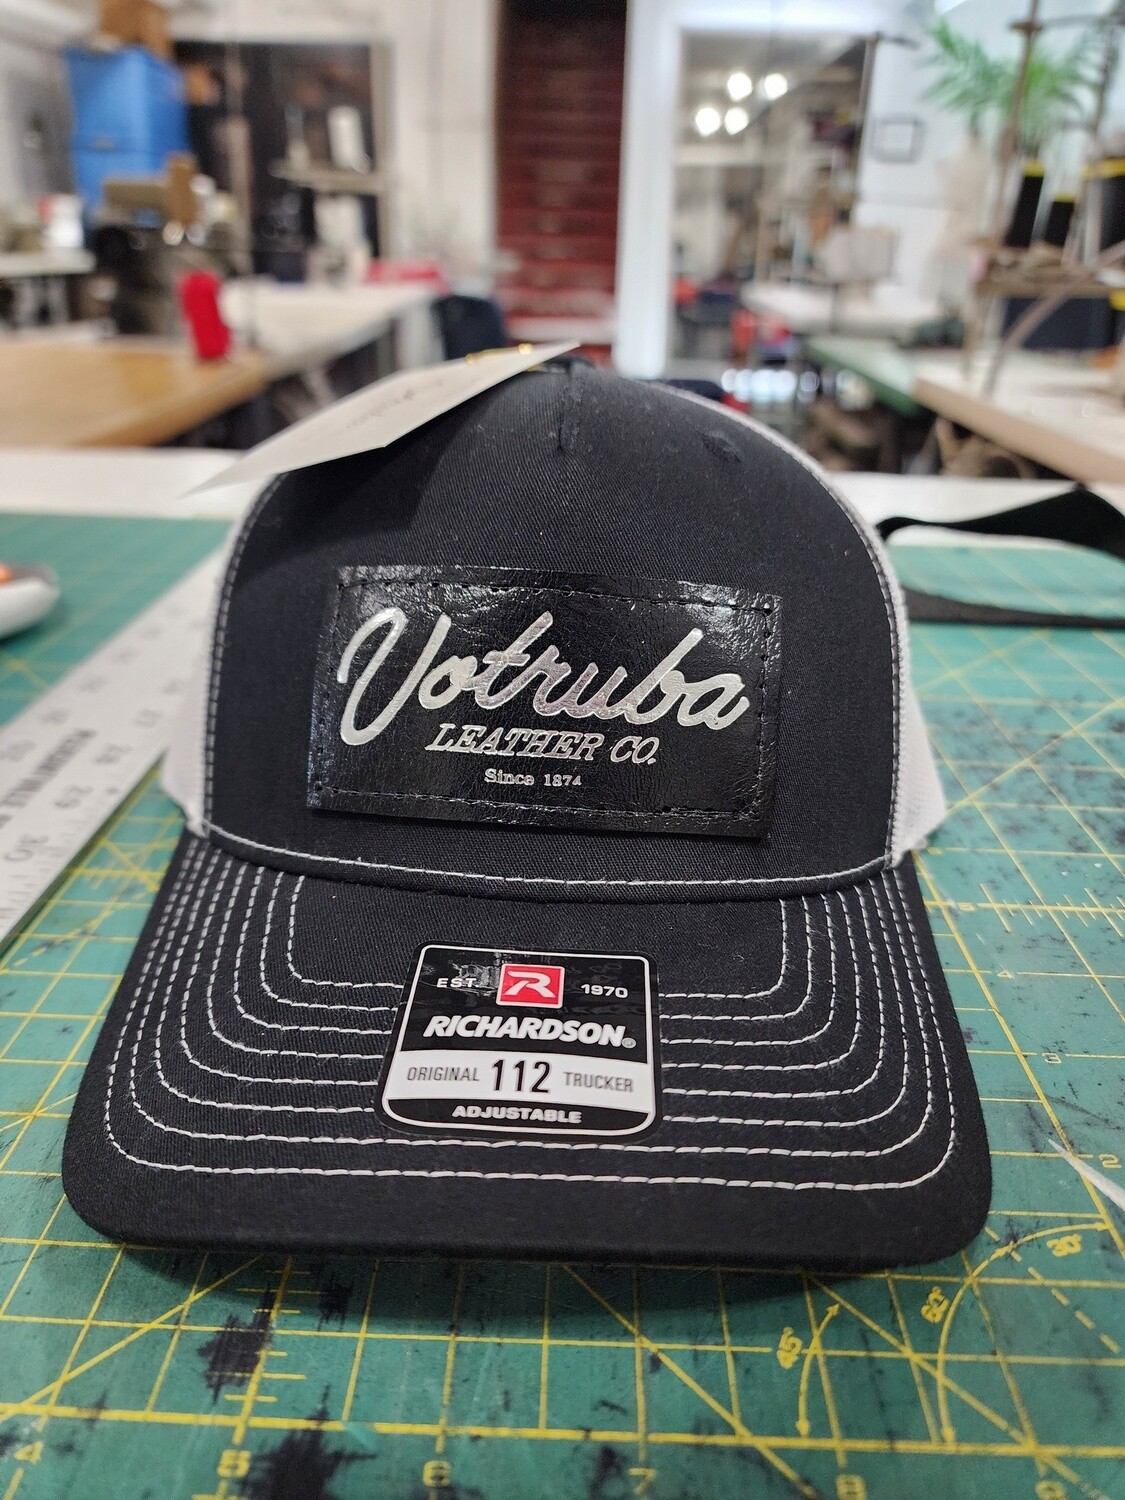 Votruba Leather Company Hats